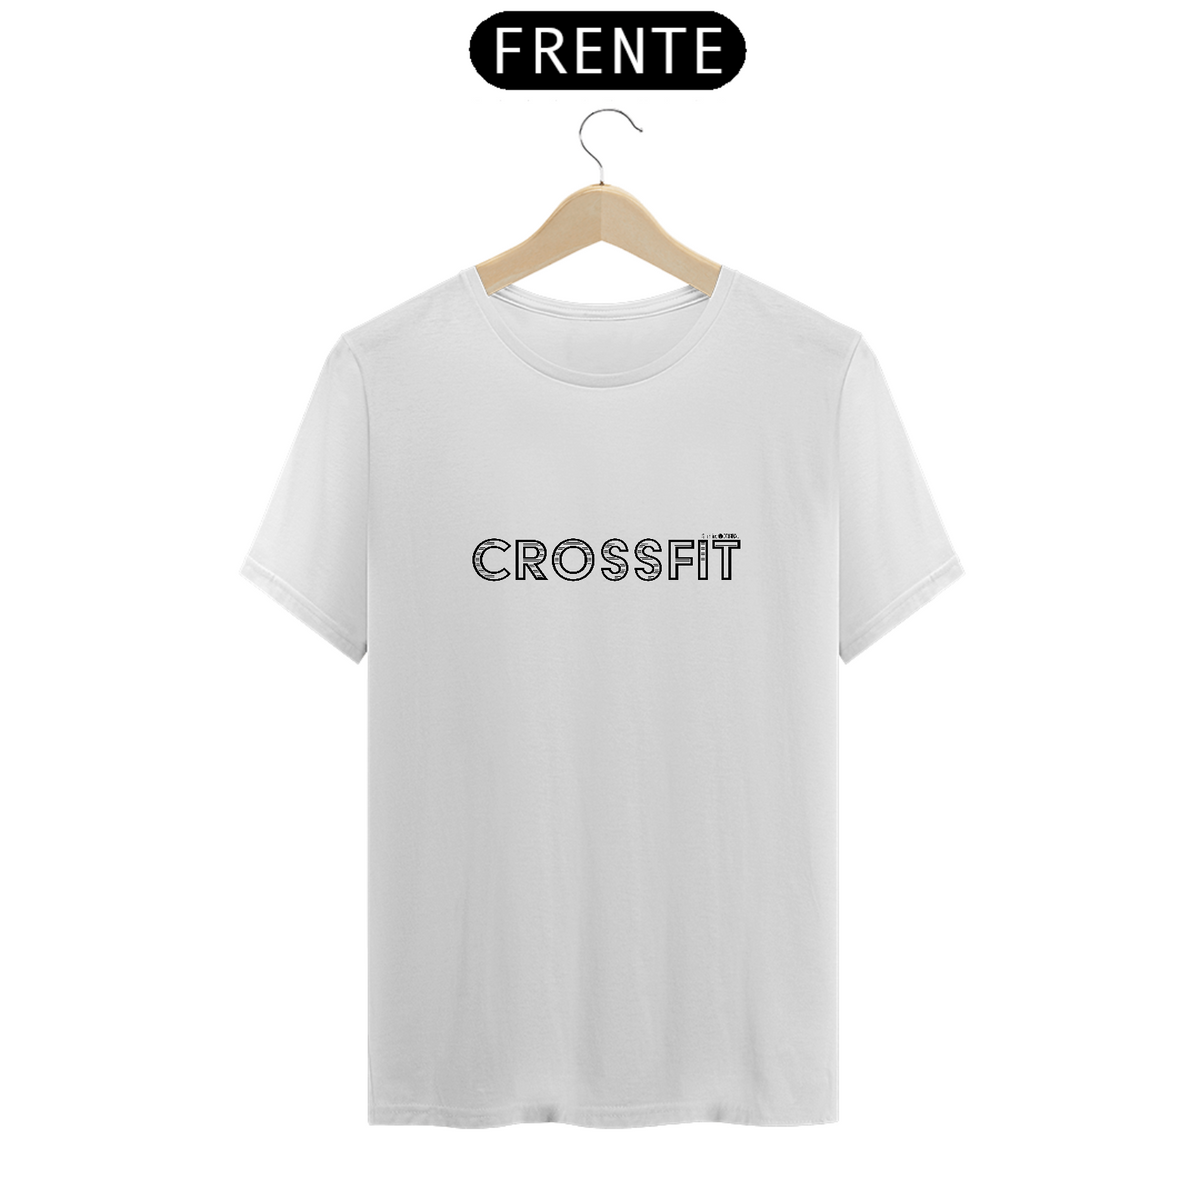 Nome do produto: Camiseta T-shirt Prime - Crossfit